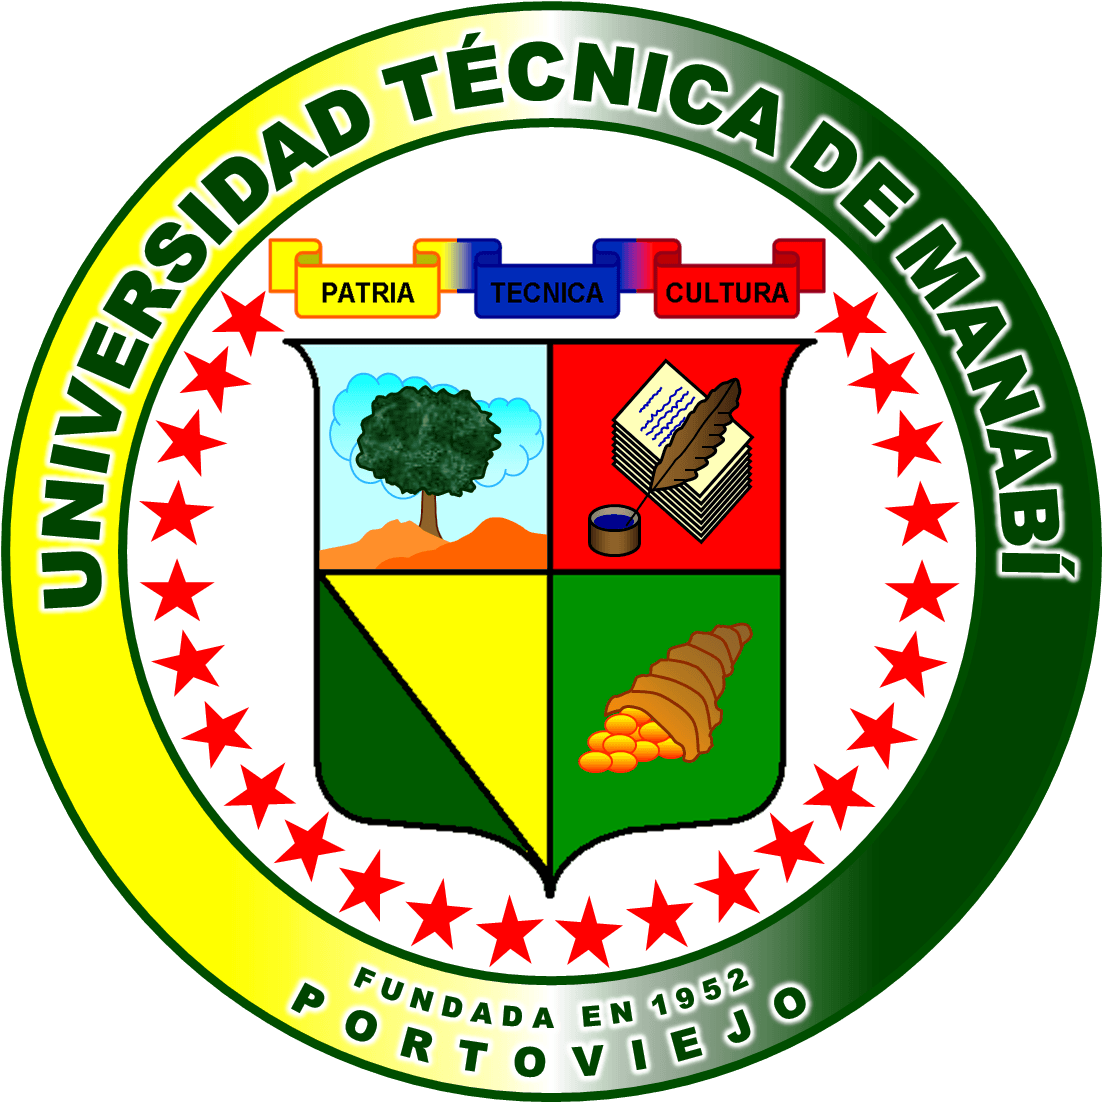 UTM Logo - File:Logo utm png.png - Wikimedia Commons